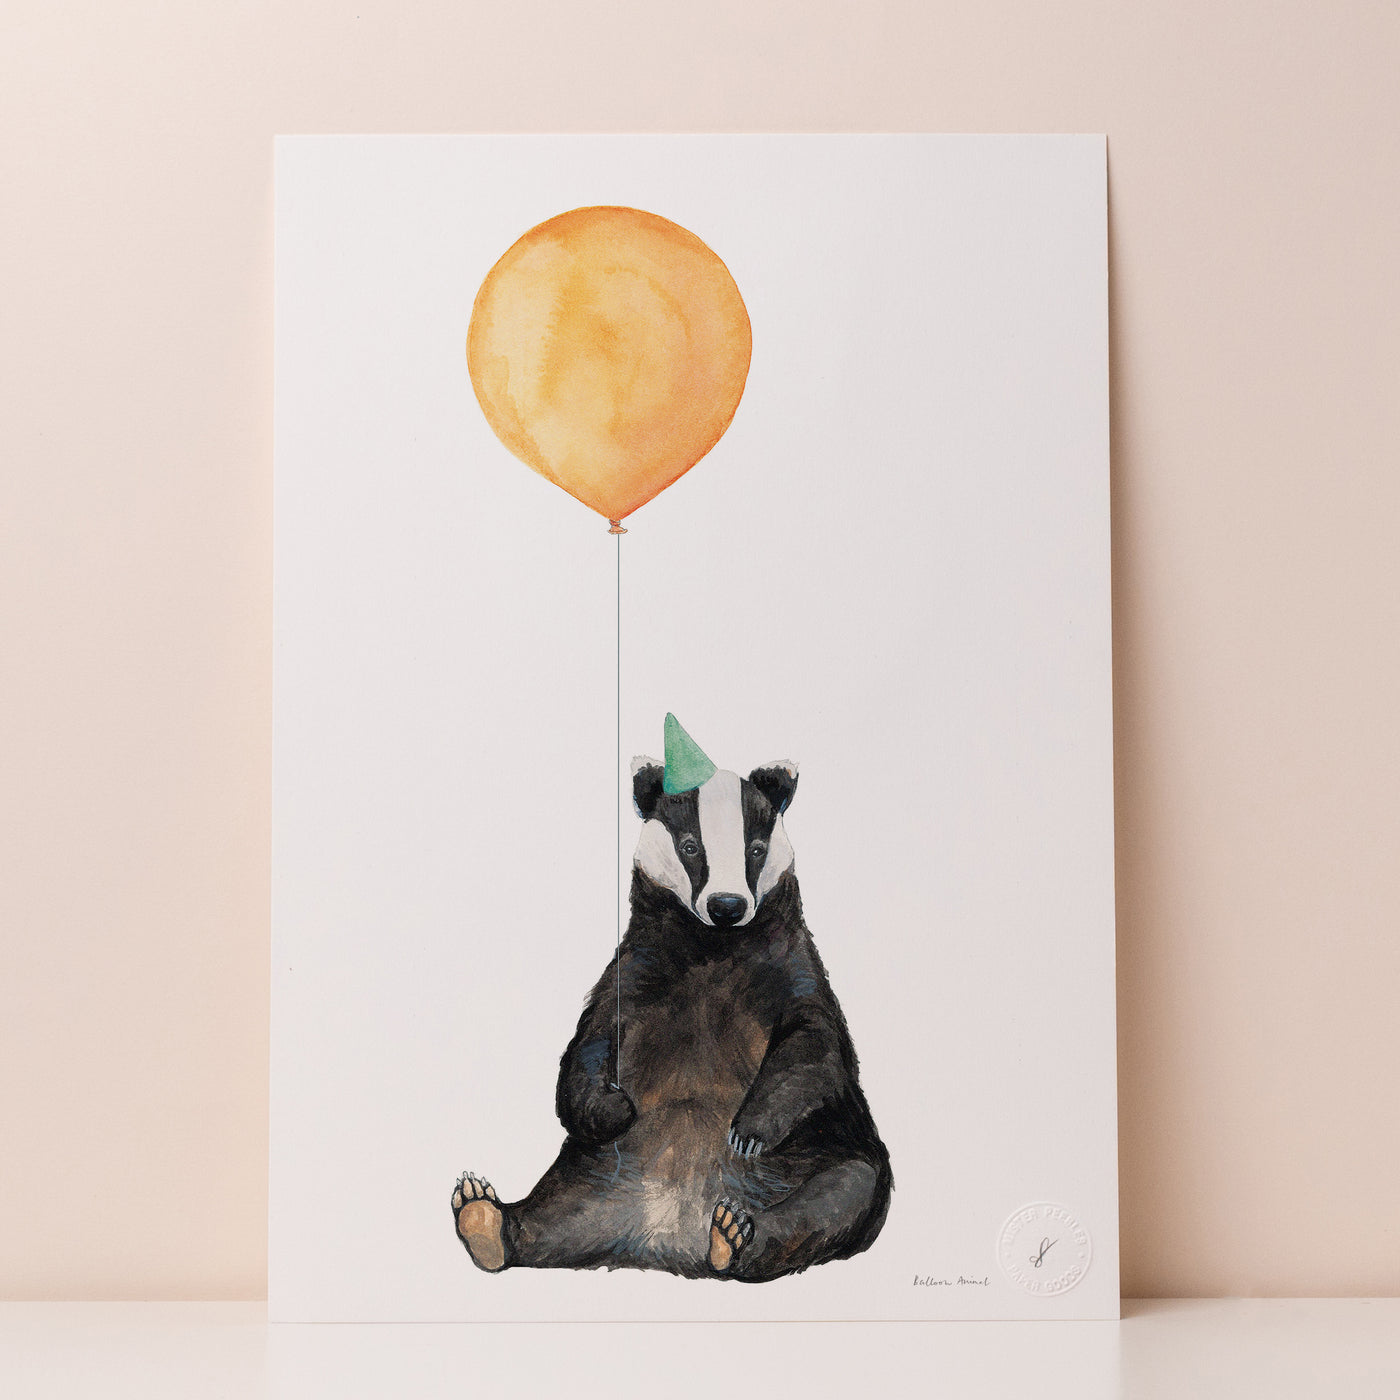 Balloon Animal Print - Badger